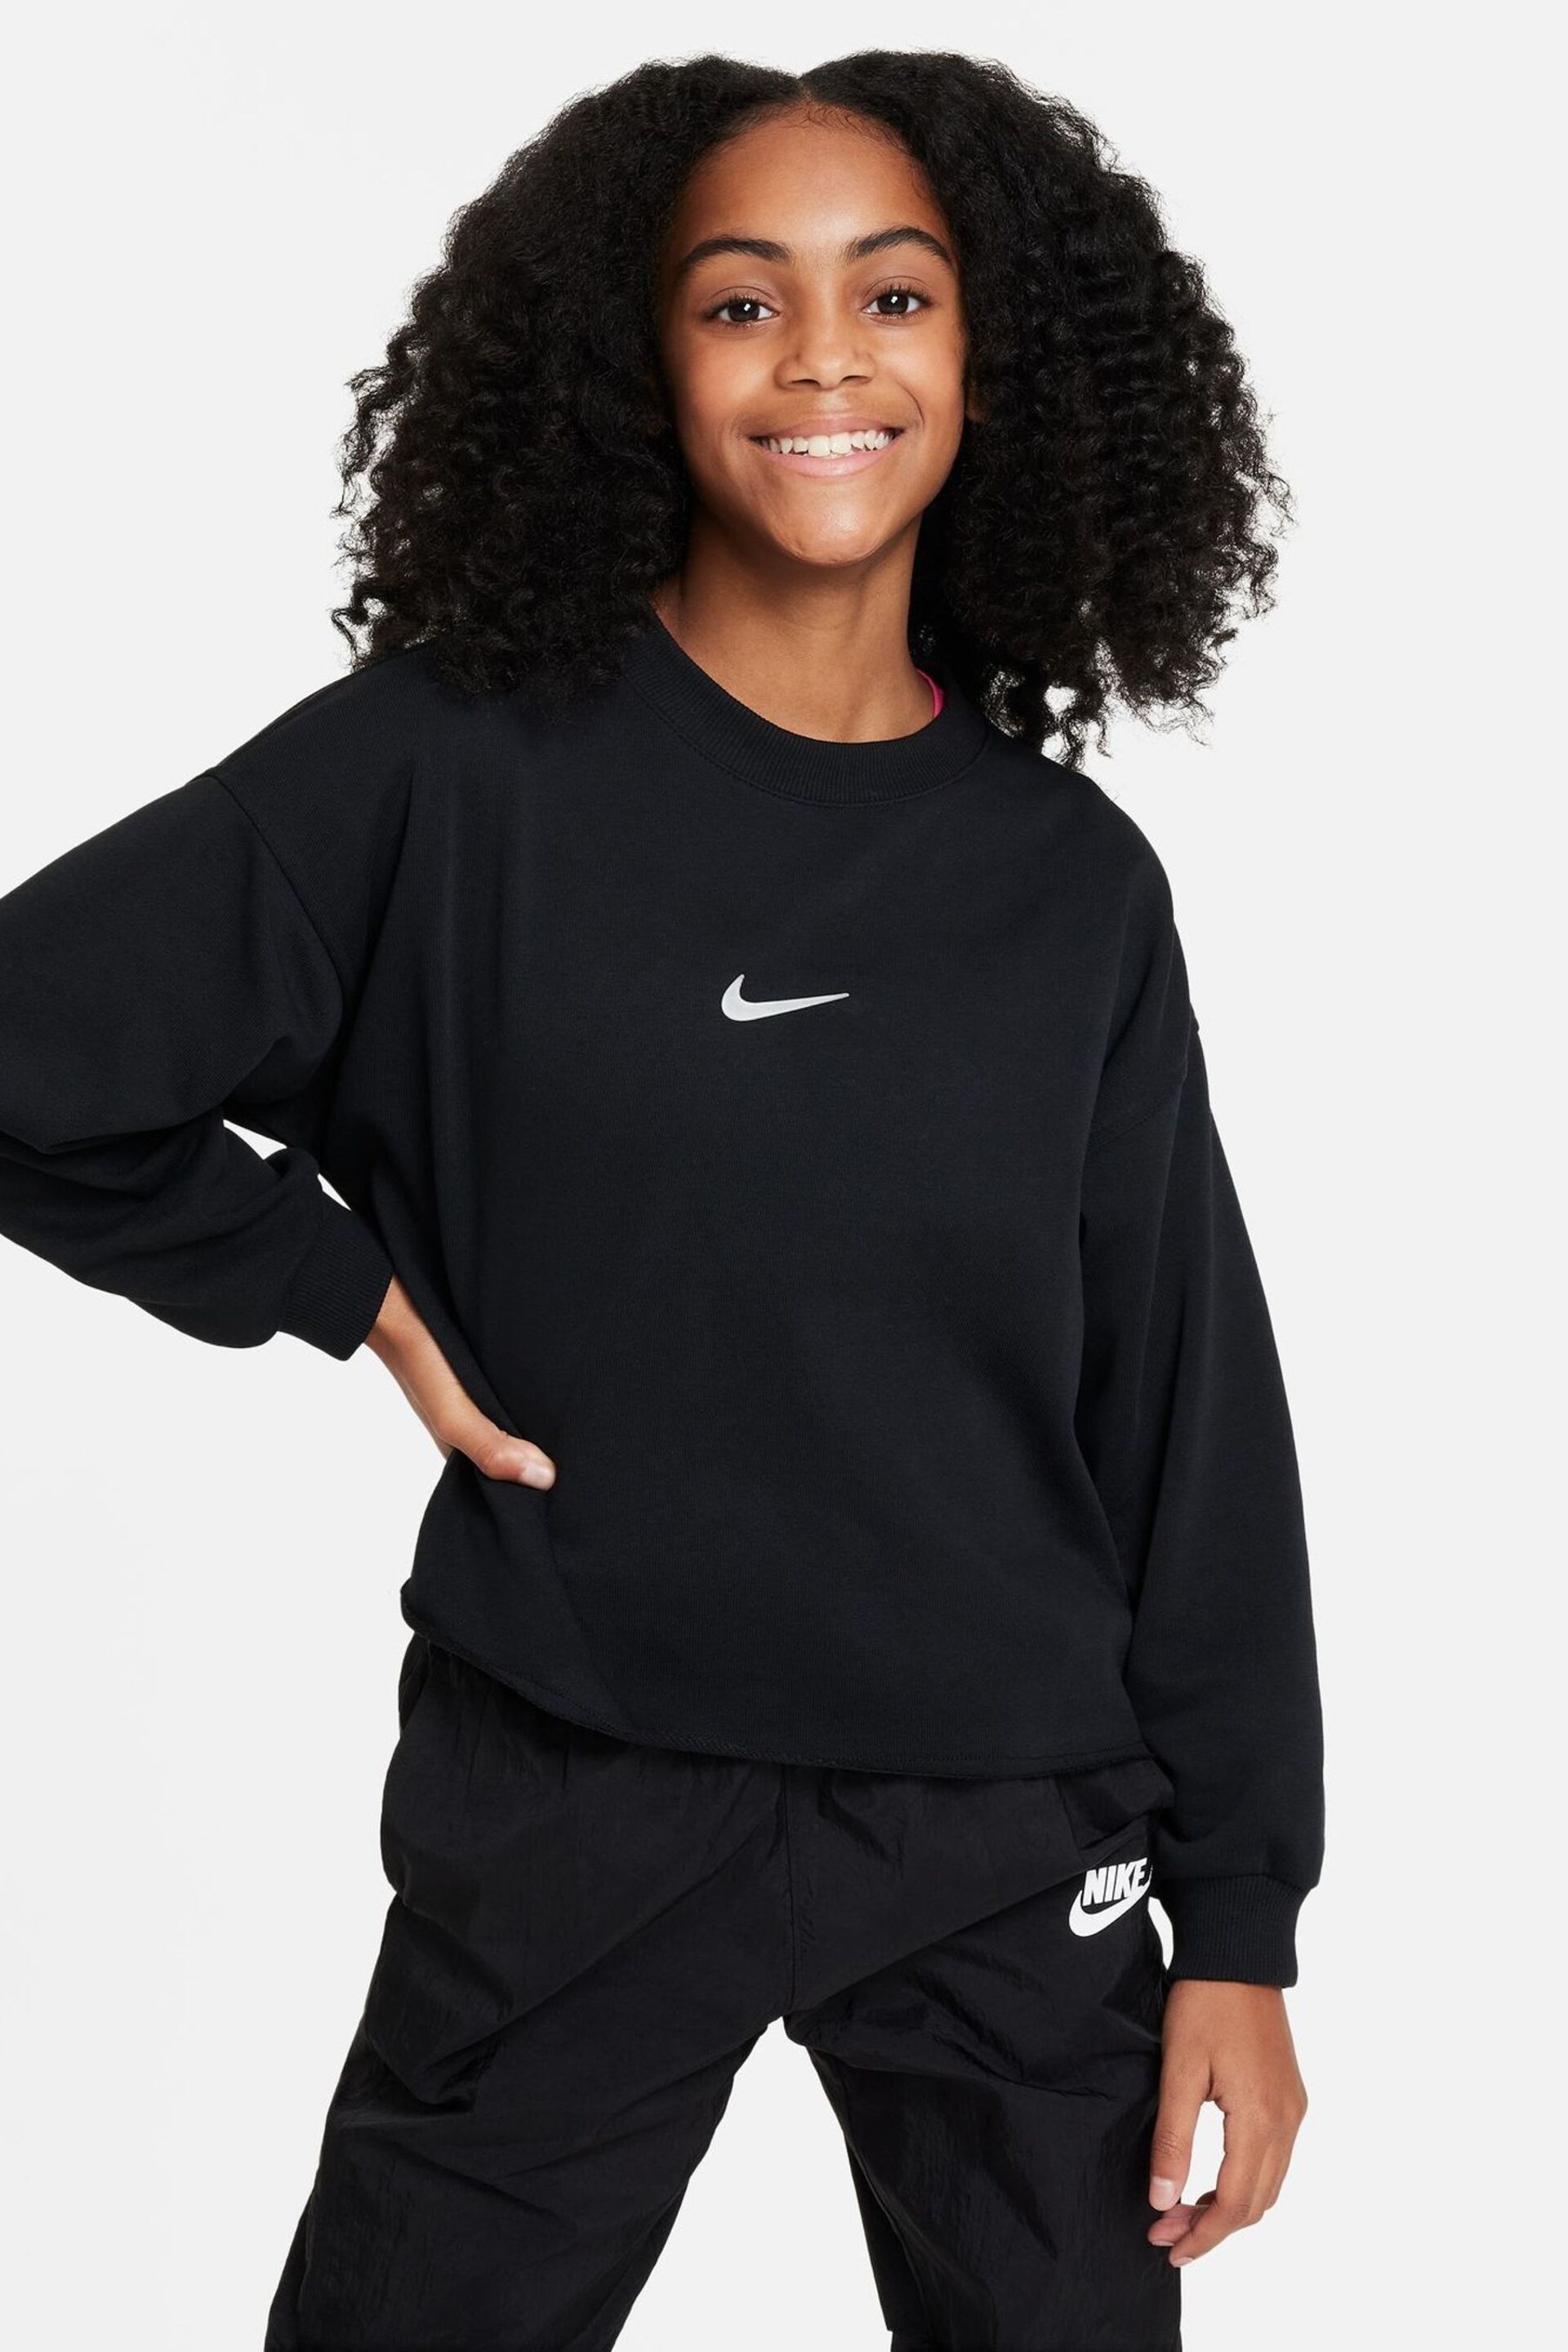 Nike Black Dri-FIT Dance Sweatshirt - Image 1 of 4